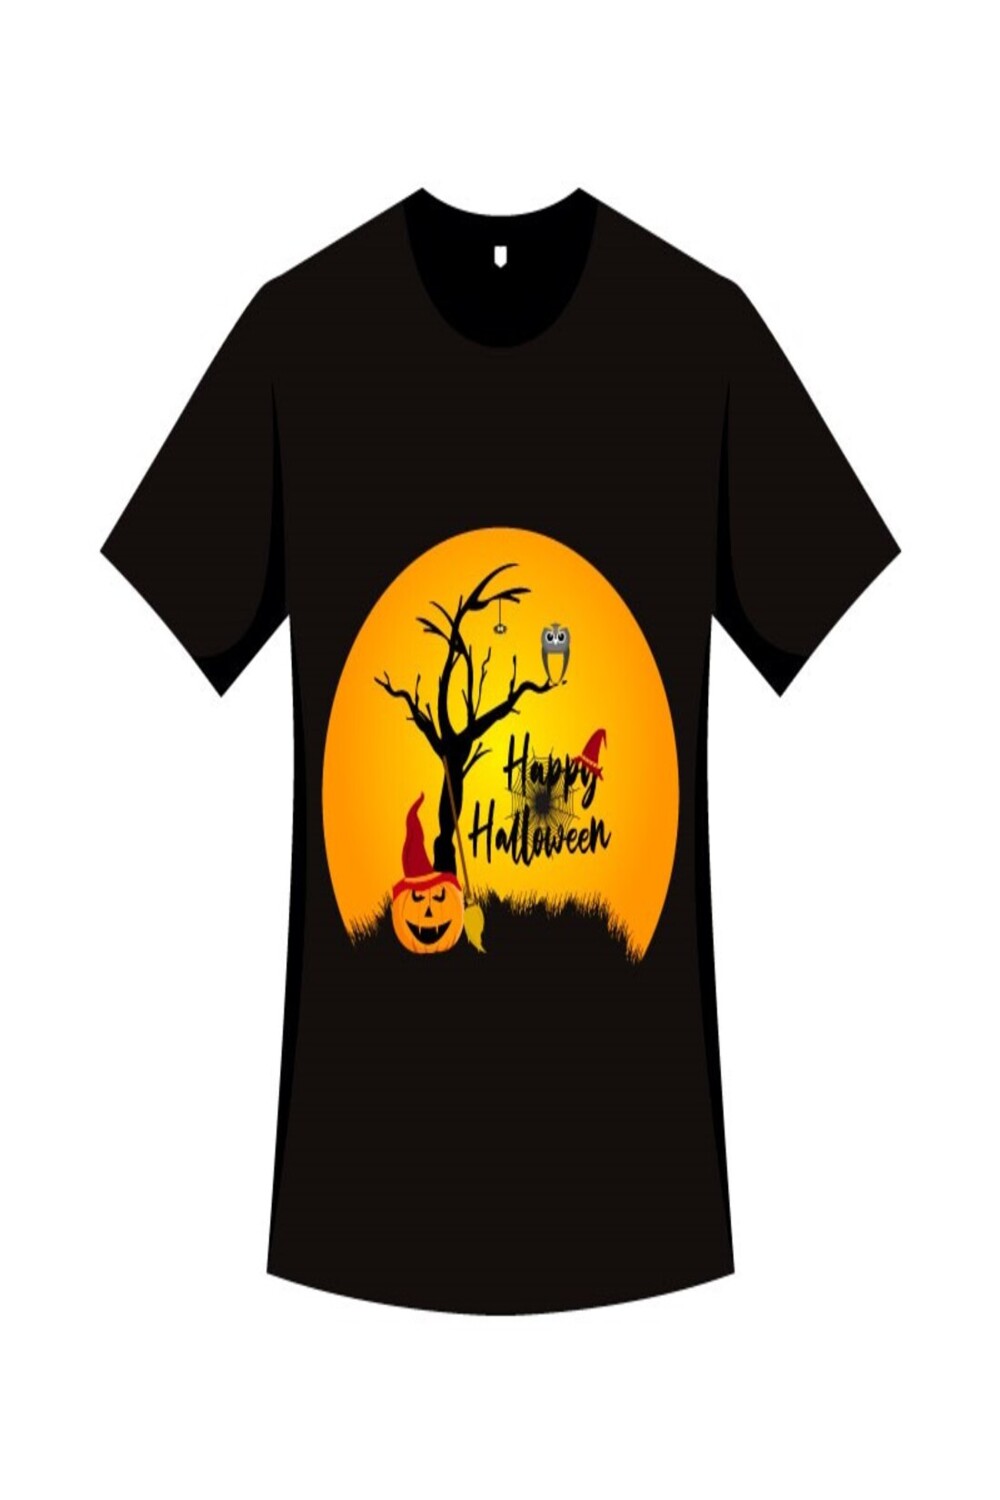 Scary T-shirt Design for Halloween pinterest image.